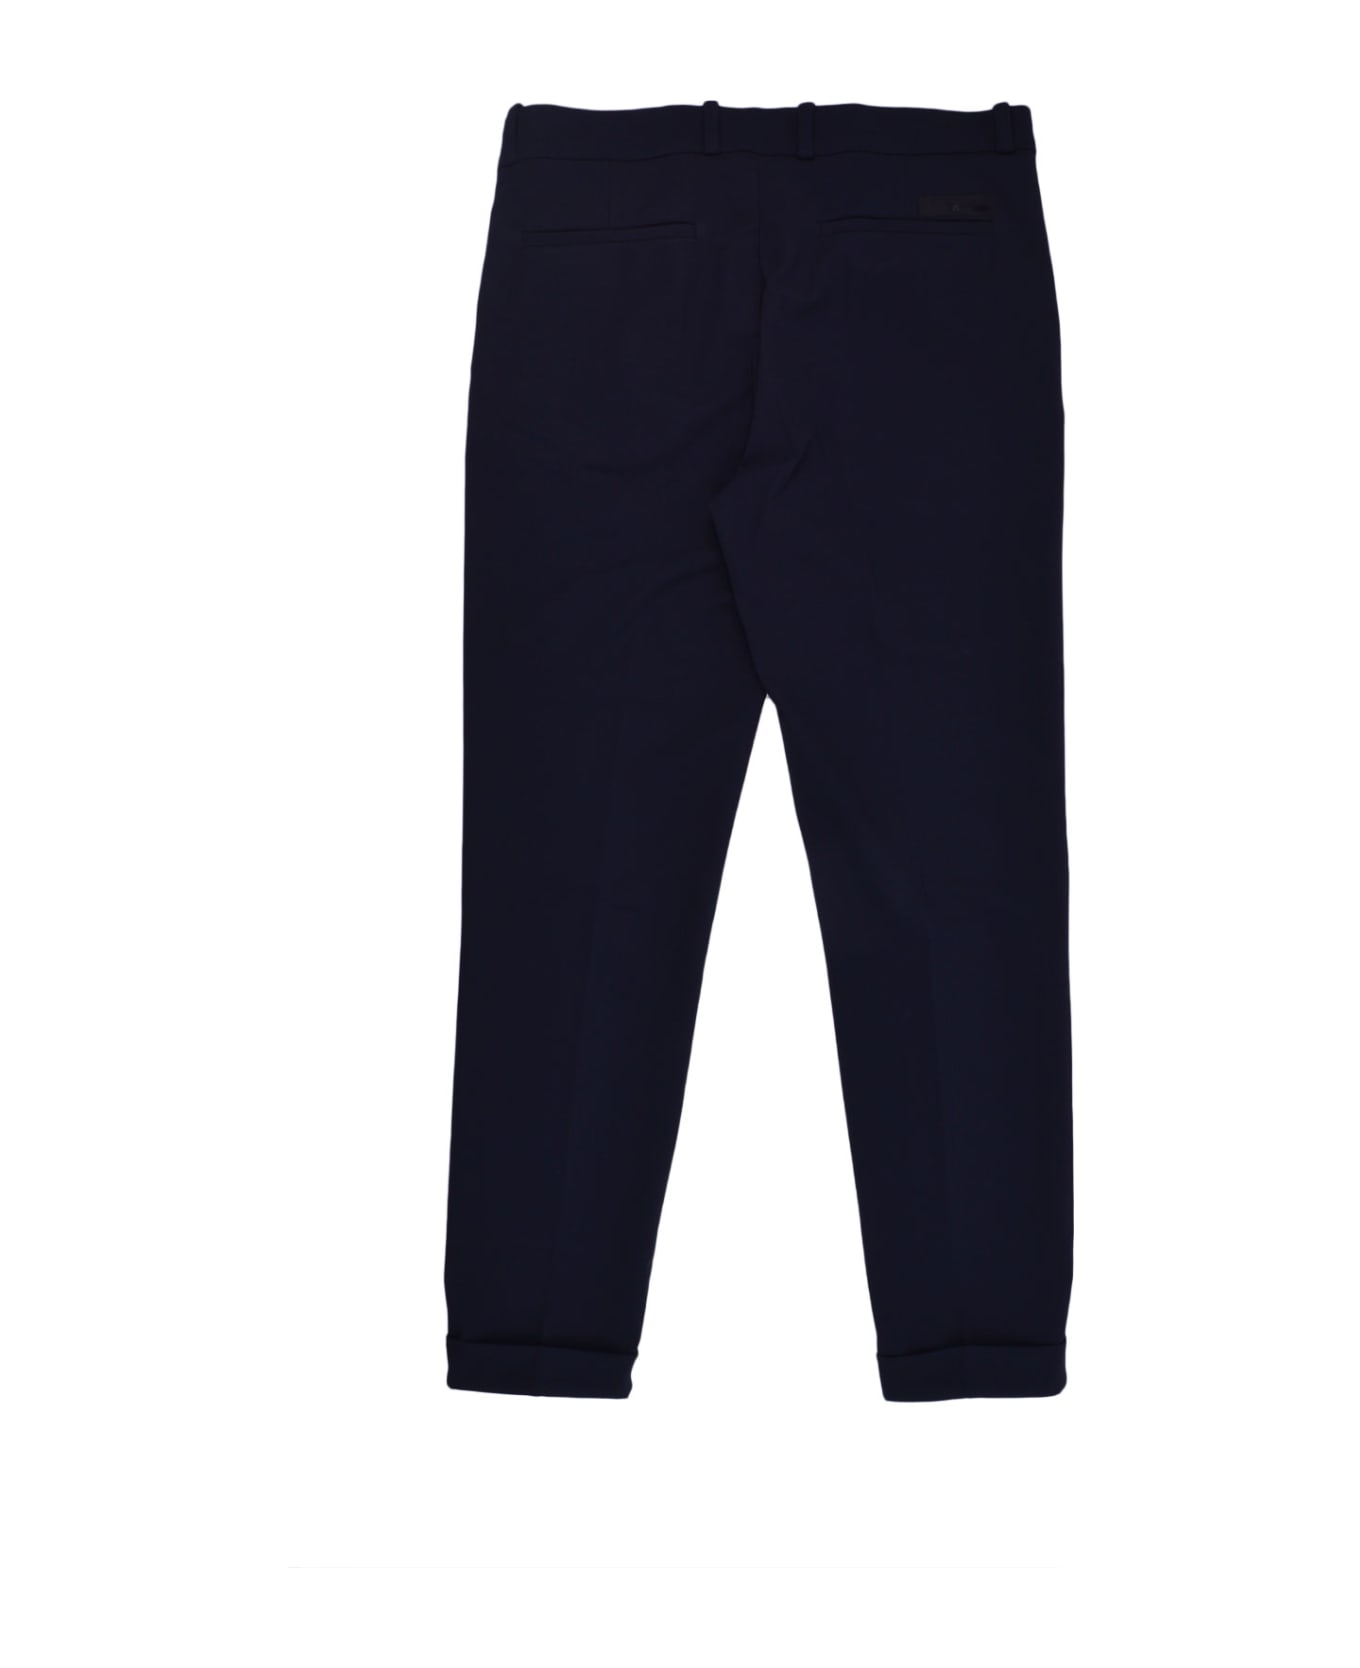 RRD - Roberto Ricci Design Pants Pants - BLUE BLACK